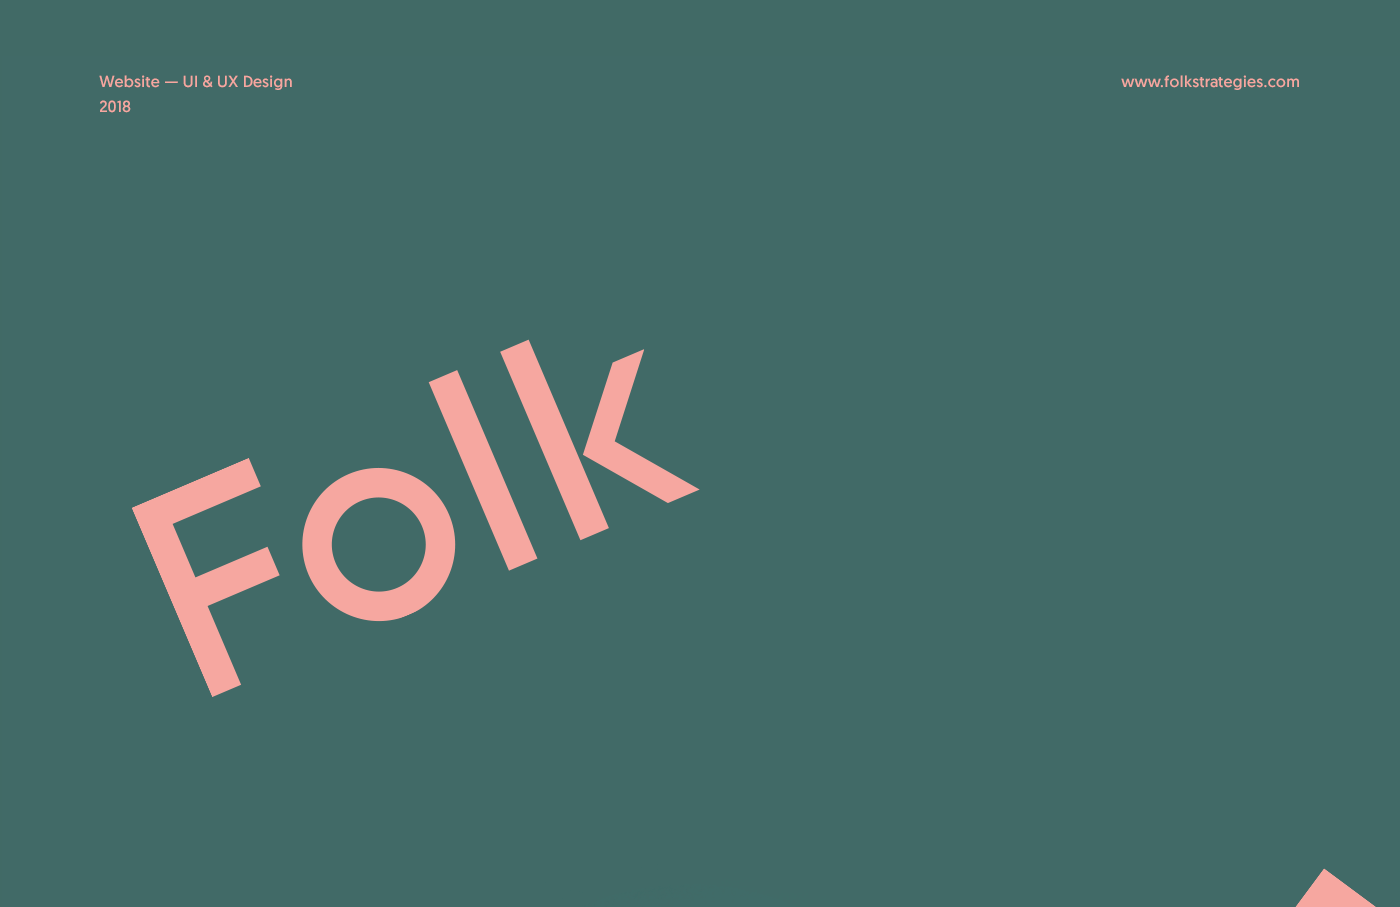 Homepages design idea #391: Folk Strategies - Website